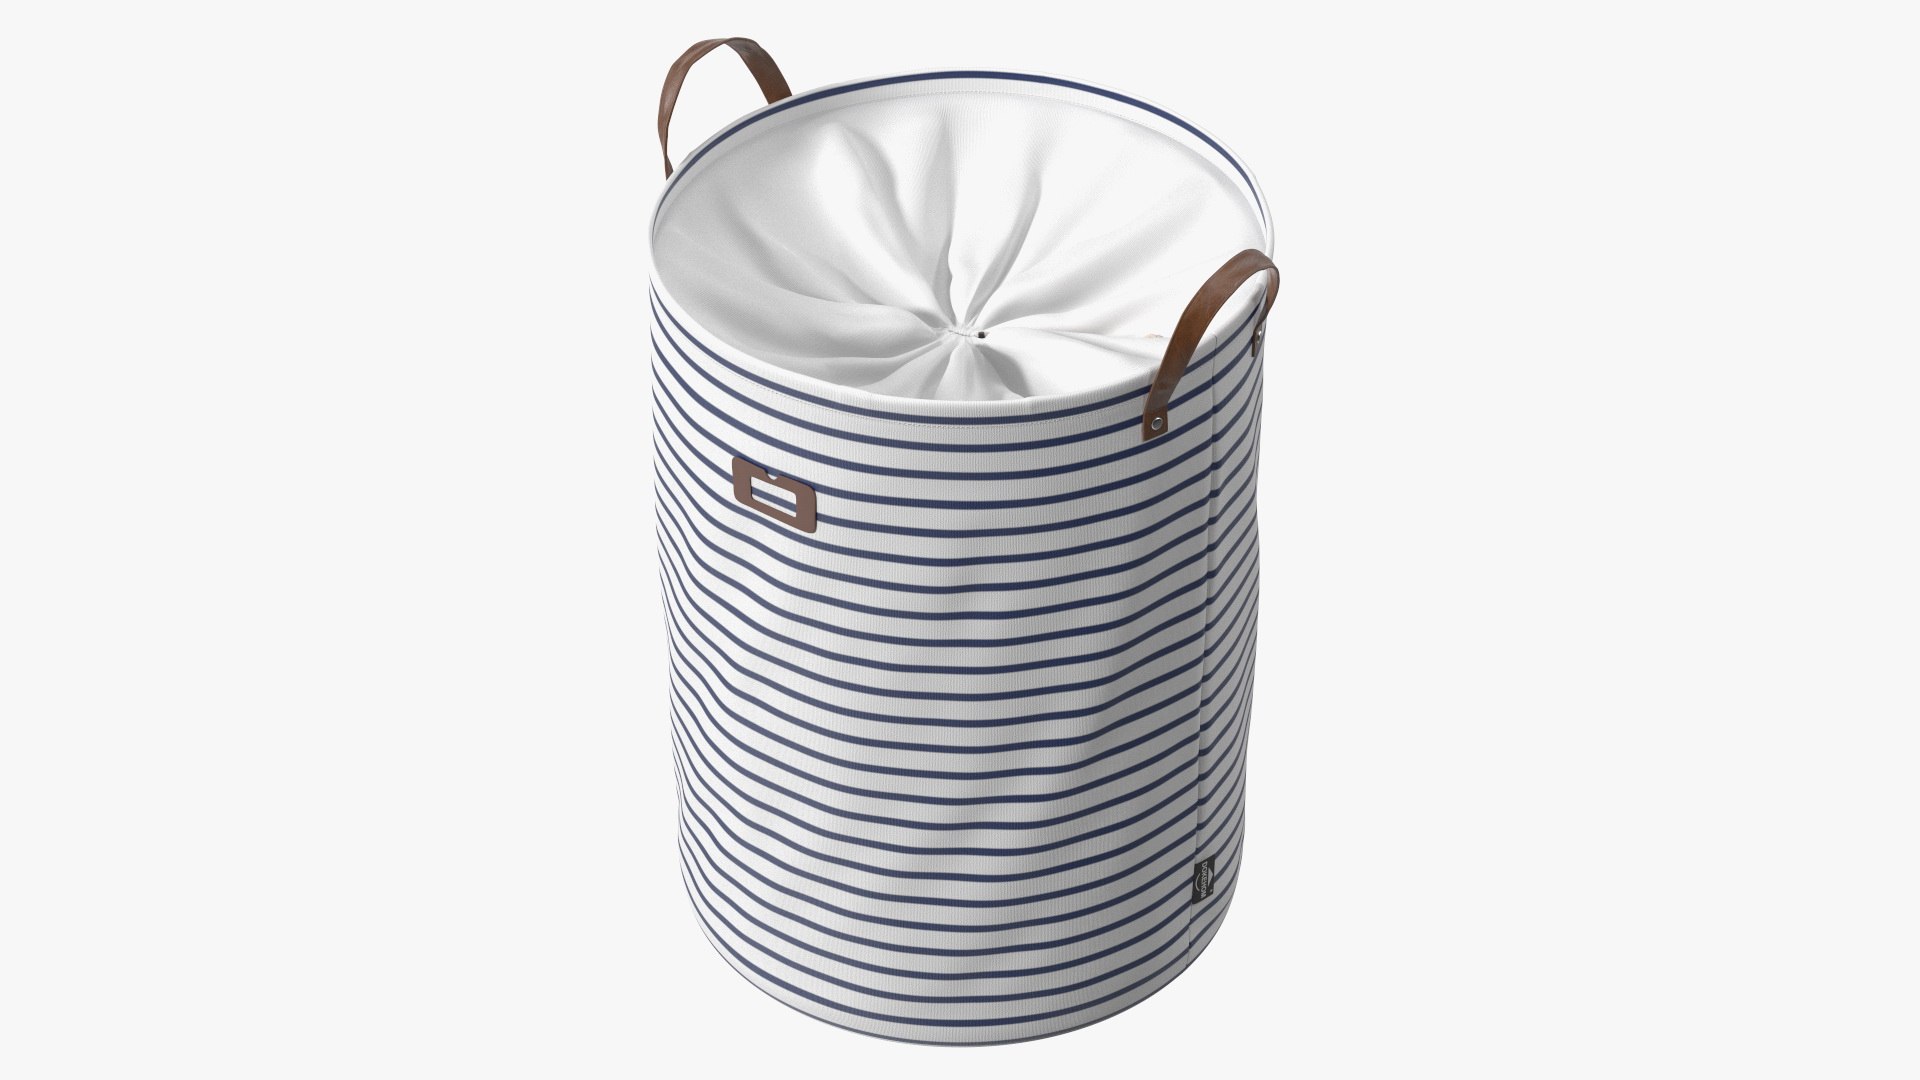 3d laundry basket with lid blue model